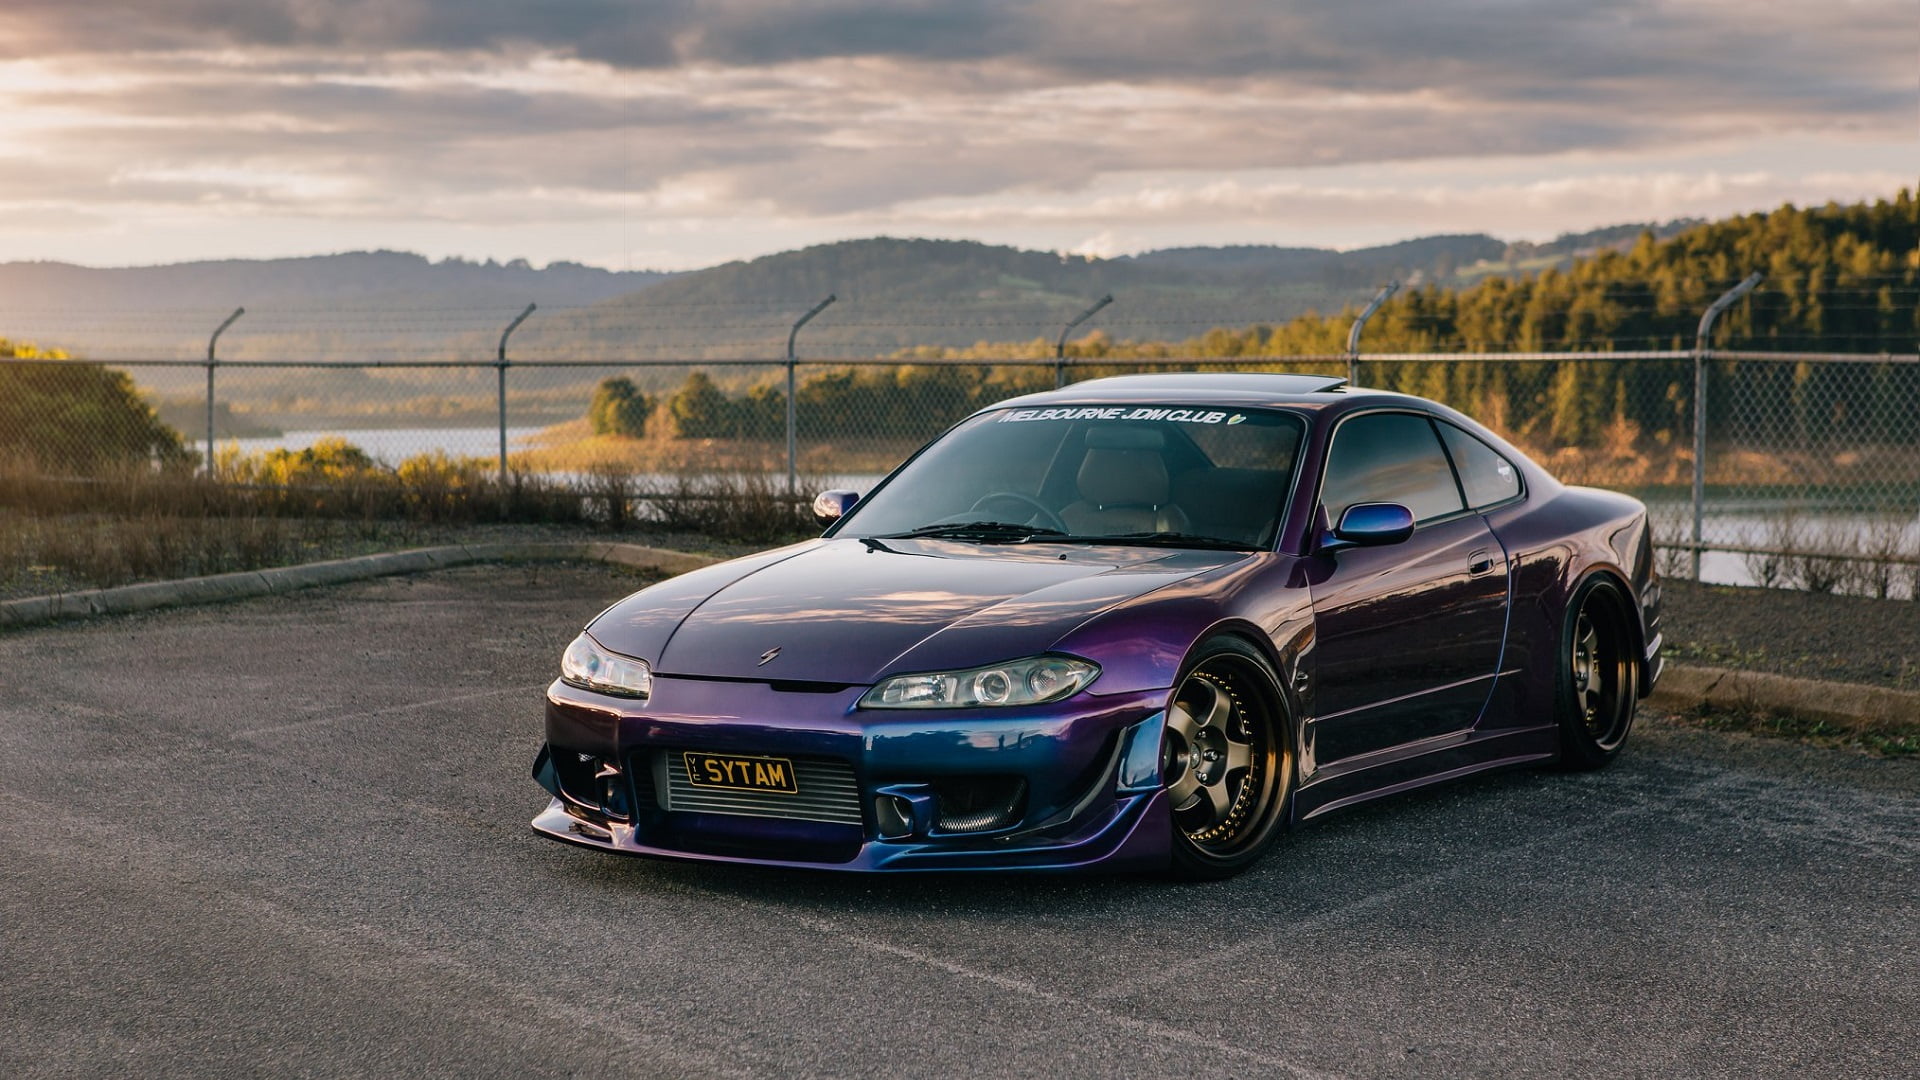 Nissan Silvia S15, Japanese cars, JDM, sports car, purple cars